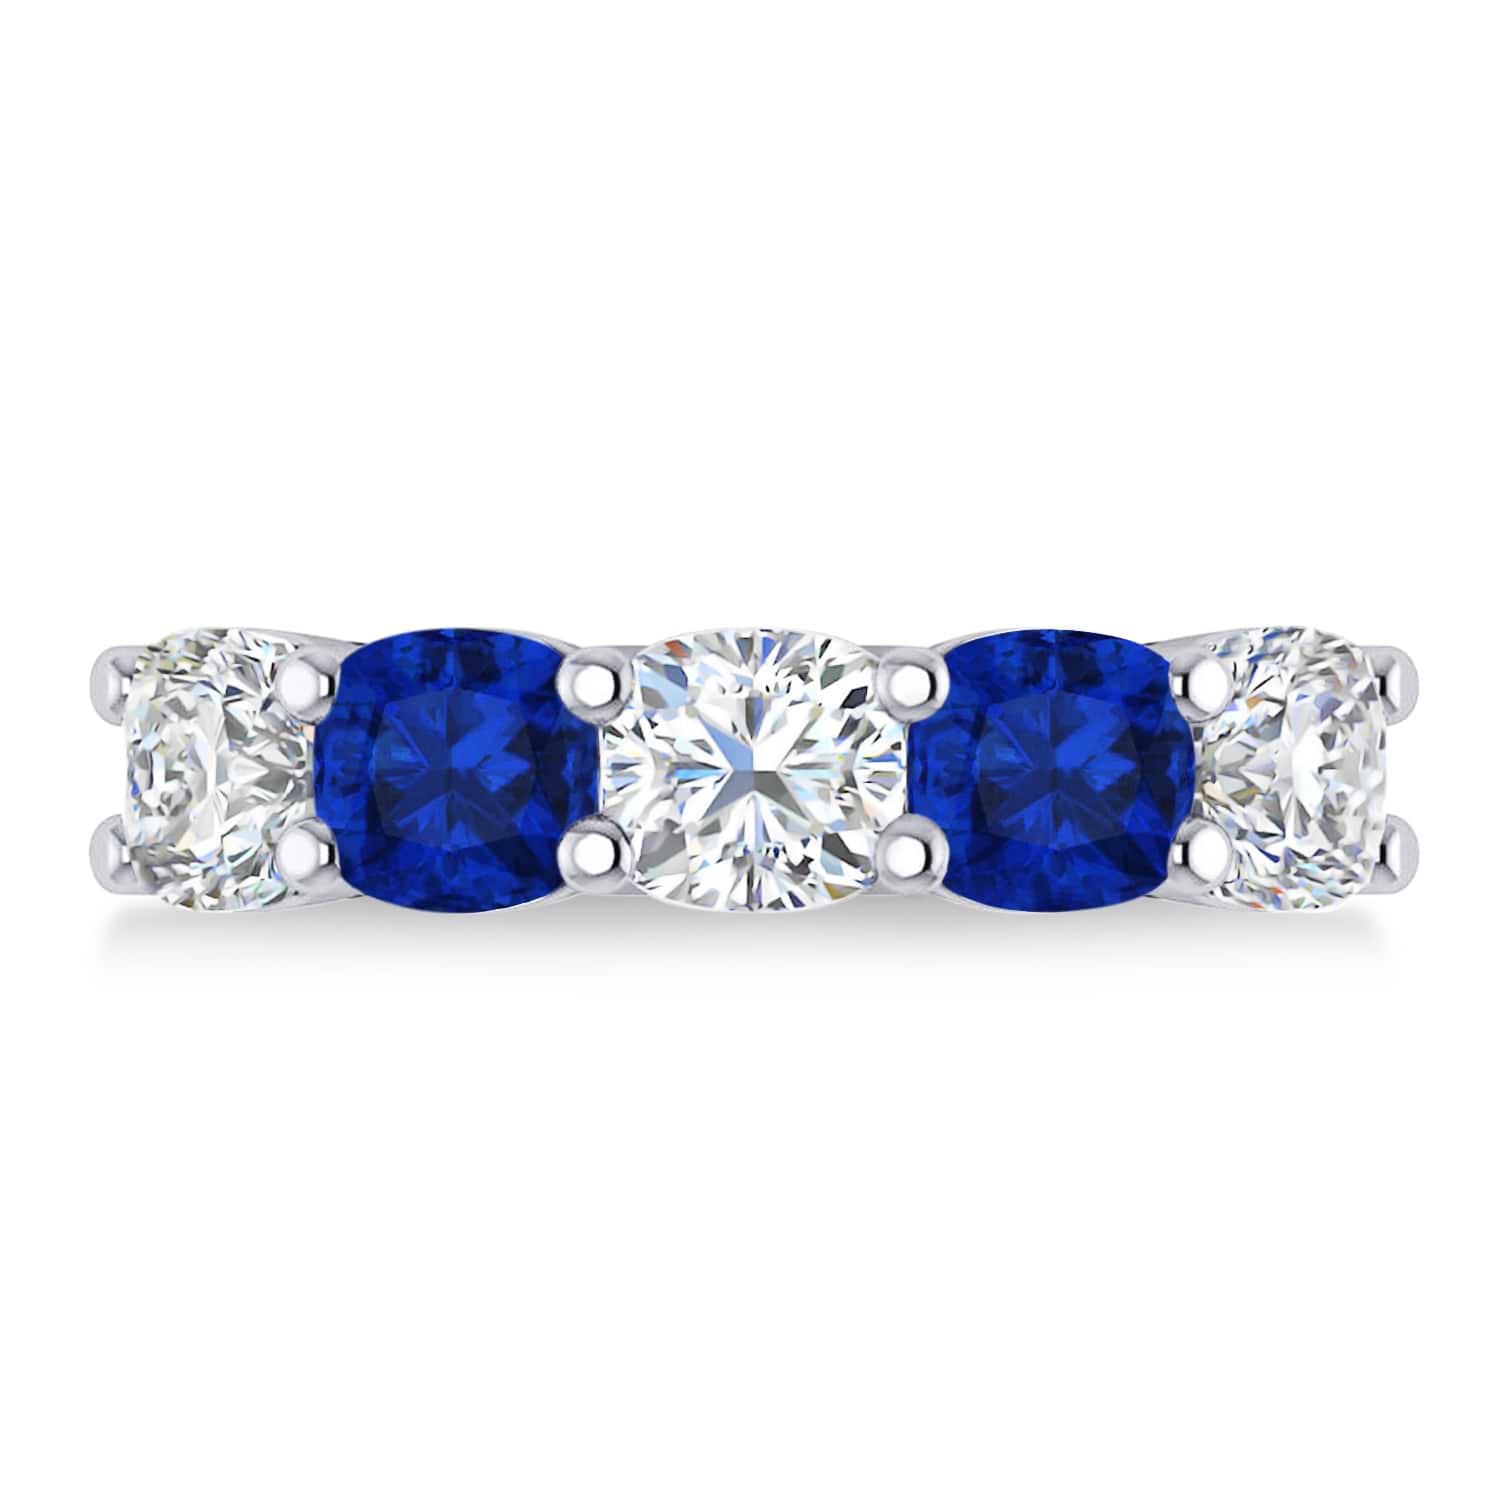 Cushion Diamond & Blue Sapphire Five Stone Ring 14k White Gold (4.05ct)